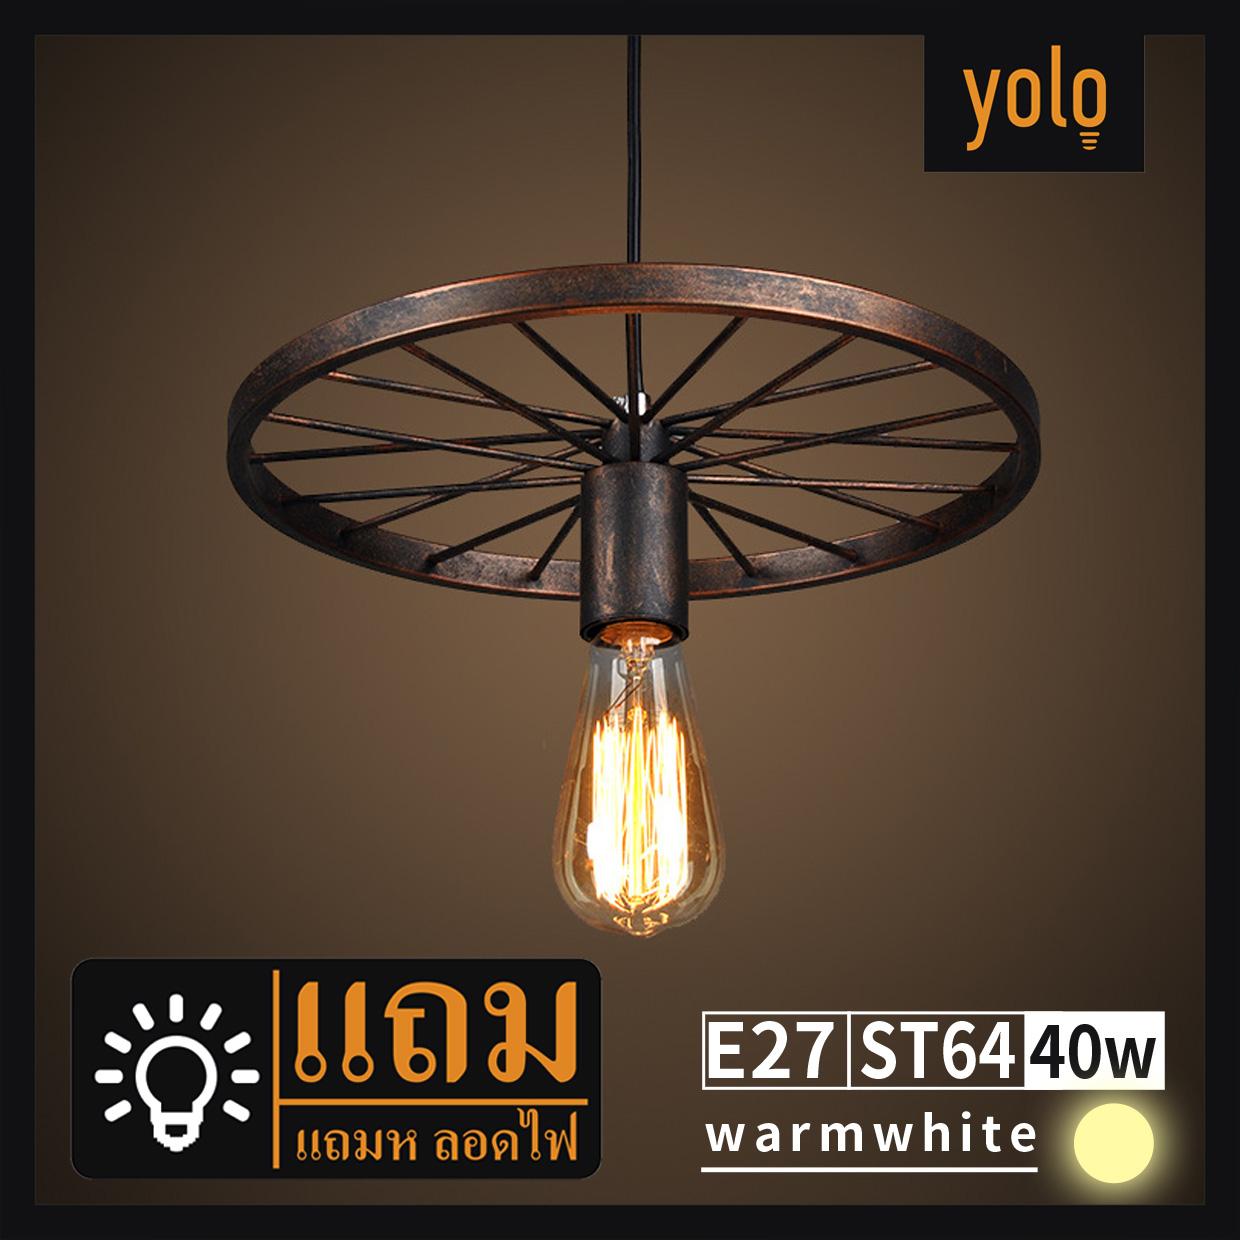 Yolo LEDโคมระย้าหัวเดียวแบบล้อลมอุตสาหกรรมย้อนยุค( D8117) 